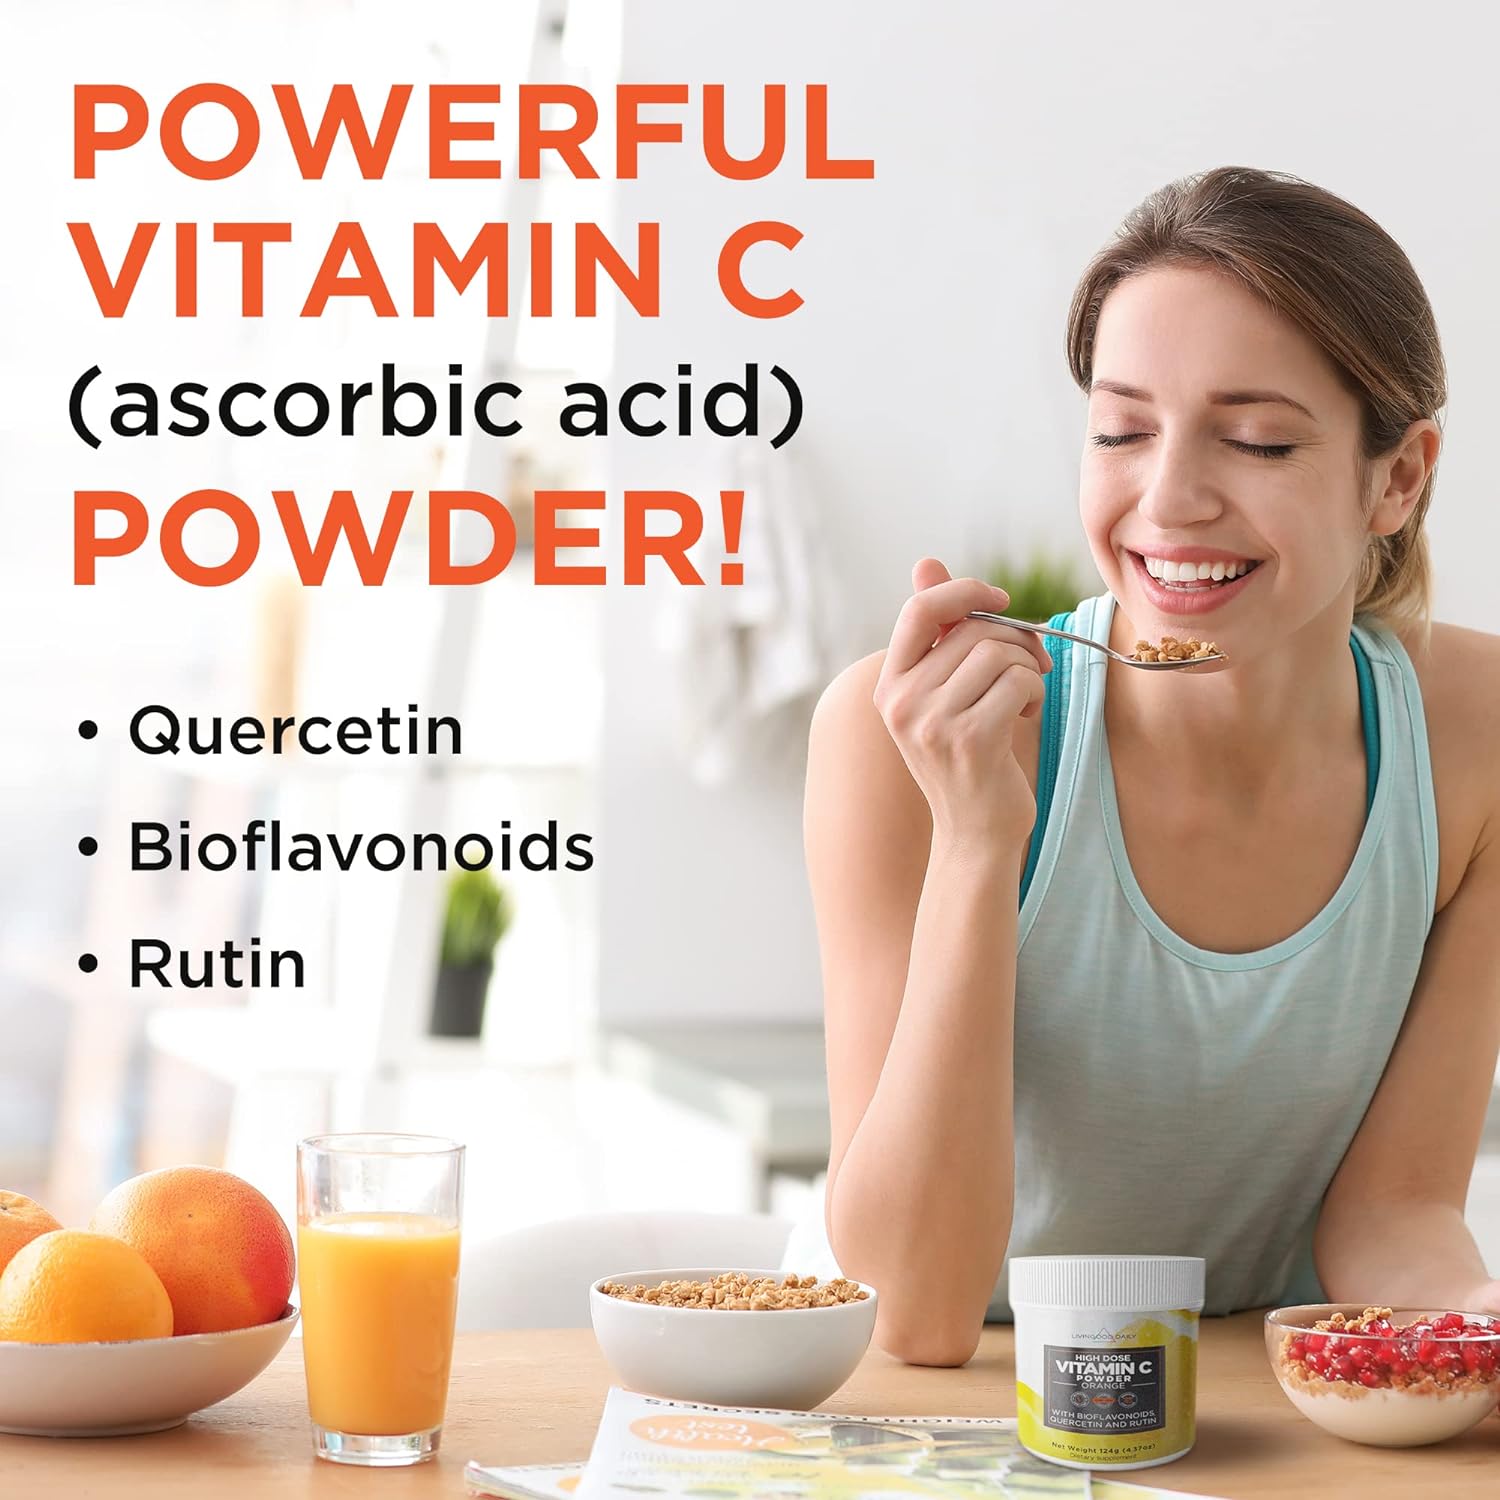 Livingood Daily High Dose Vitamin C Powder Supplement - 2,600mg Ascorbic Acid Powder Supports Immunity & Skin Health - Powdered Vitamin C with Quercetin & Citrus Bioflavonoids - Vegan, 30 Servings : Health & Household